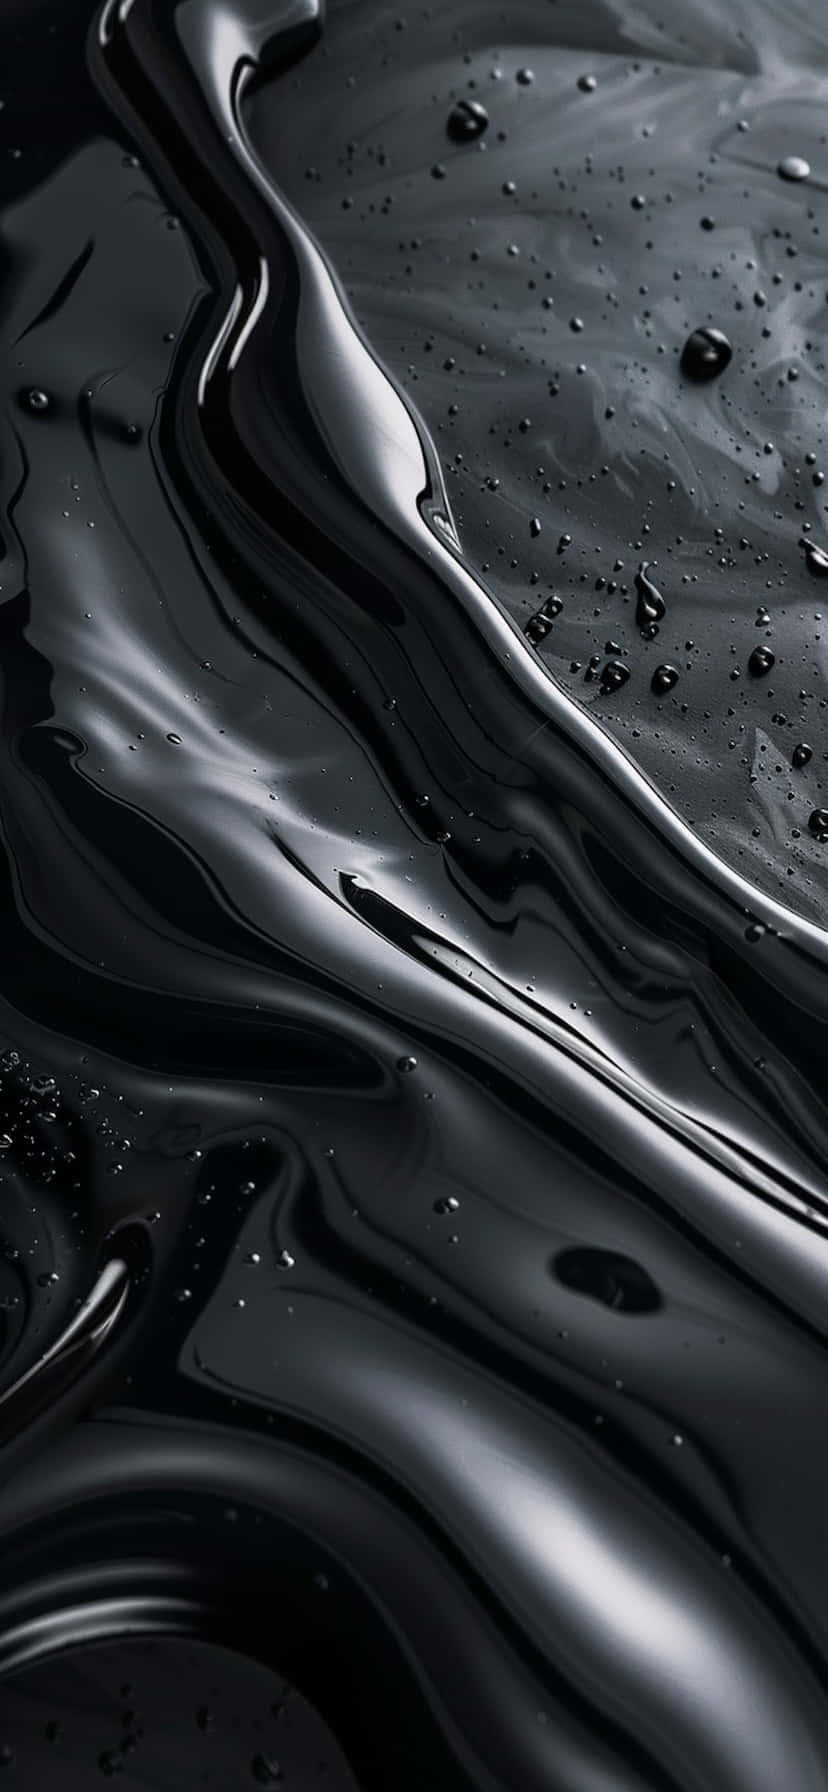 Blacki Phone X R Wallpaperwith Water Droplets Wallpaper